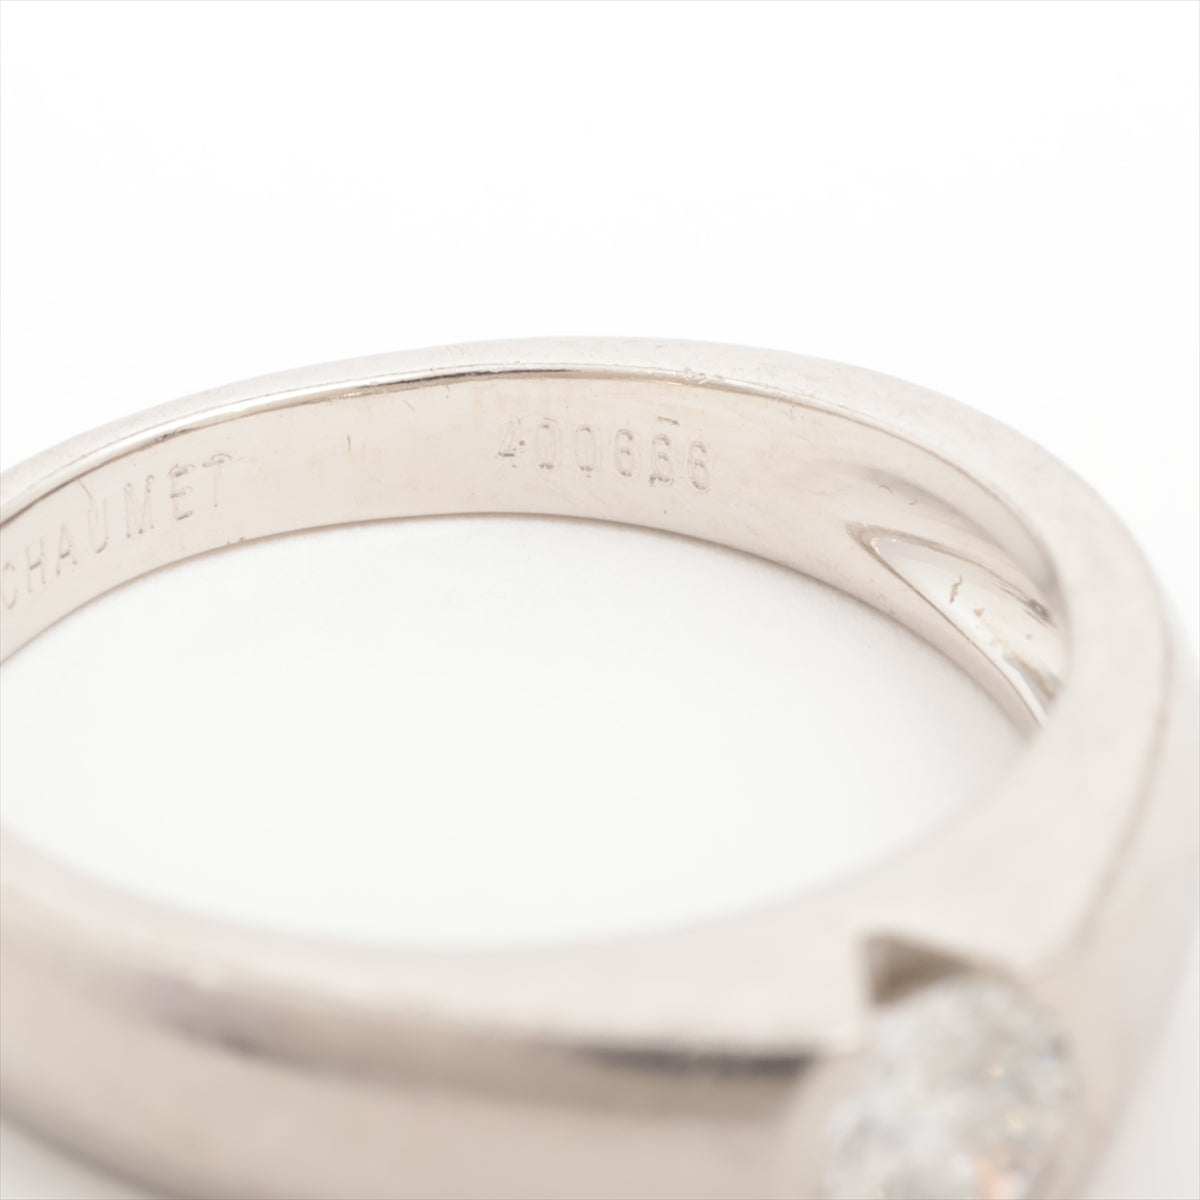 Chaumet Fidelite diamond rings Pt950 6.7g Diamond diameter approx. 4.50mm